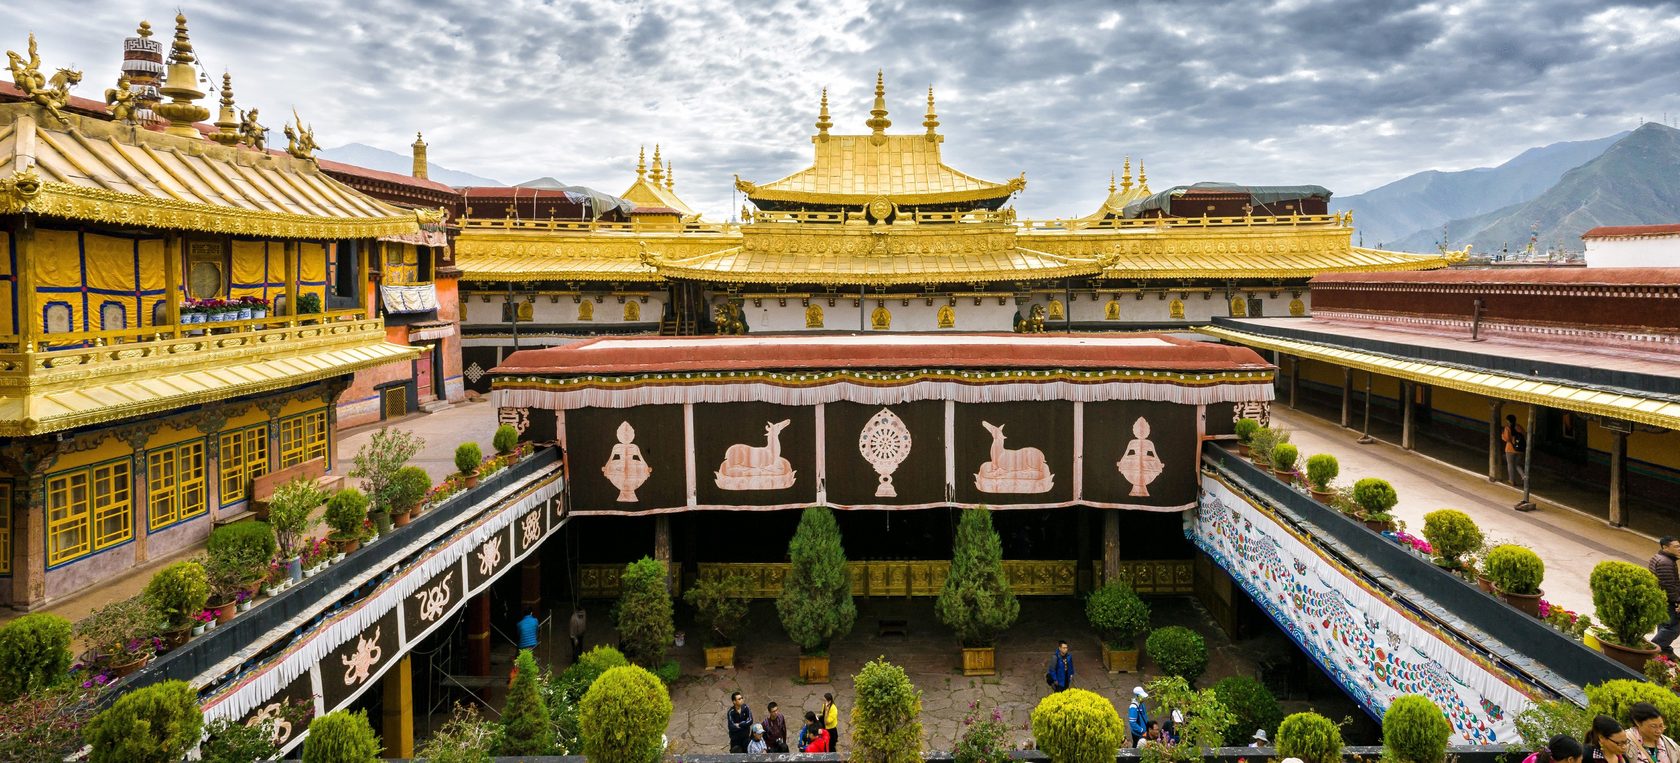 Храм Джоканг в Тибете